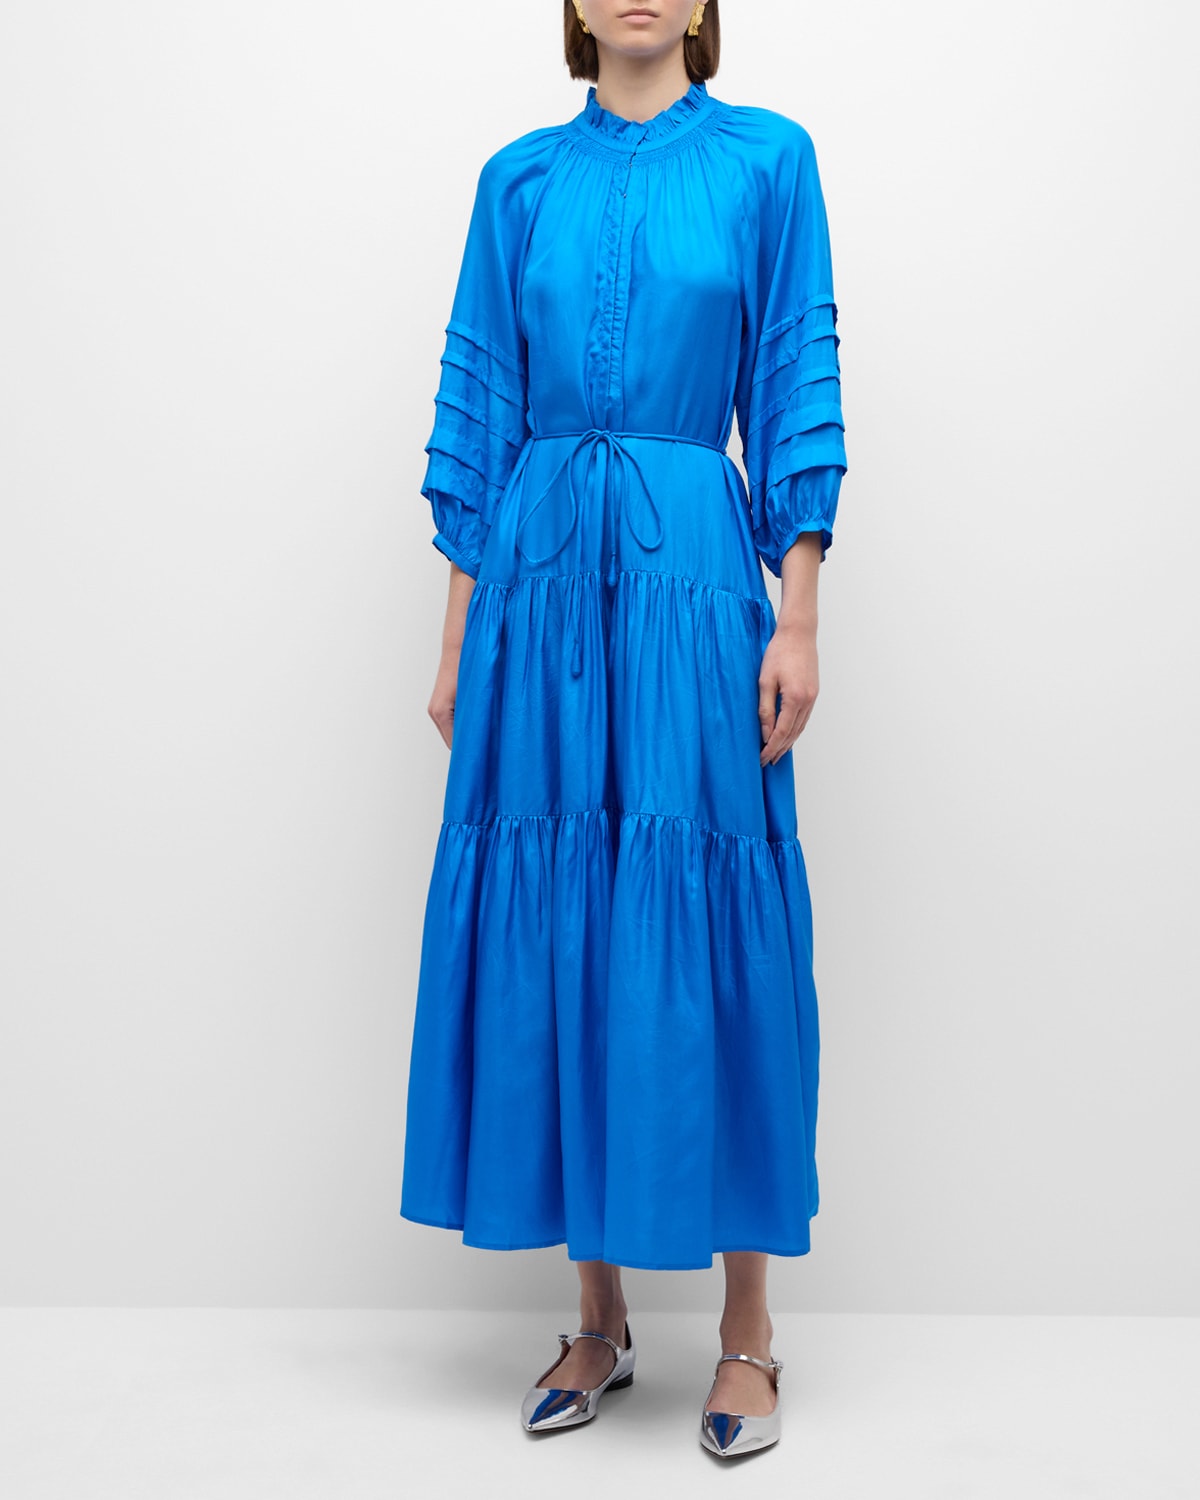 Trinidad Tiered Blouson-Sleeve Maxi Dress